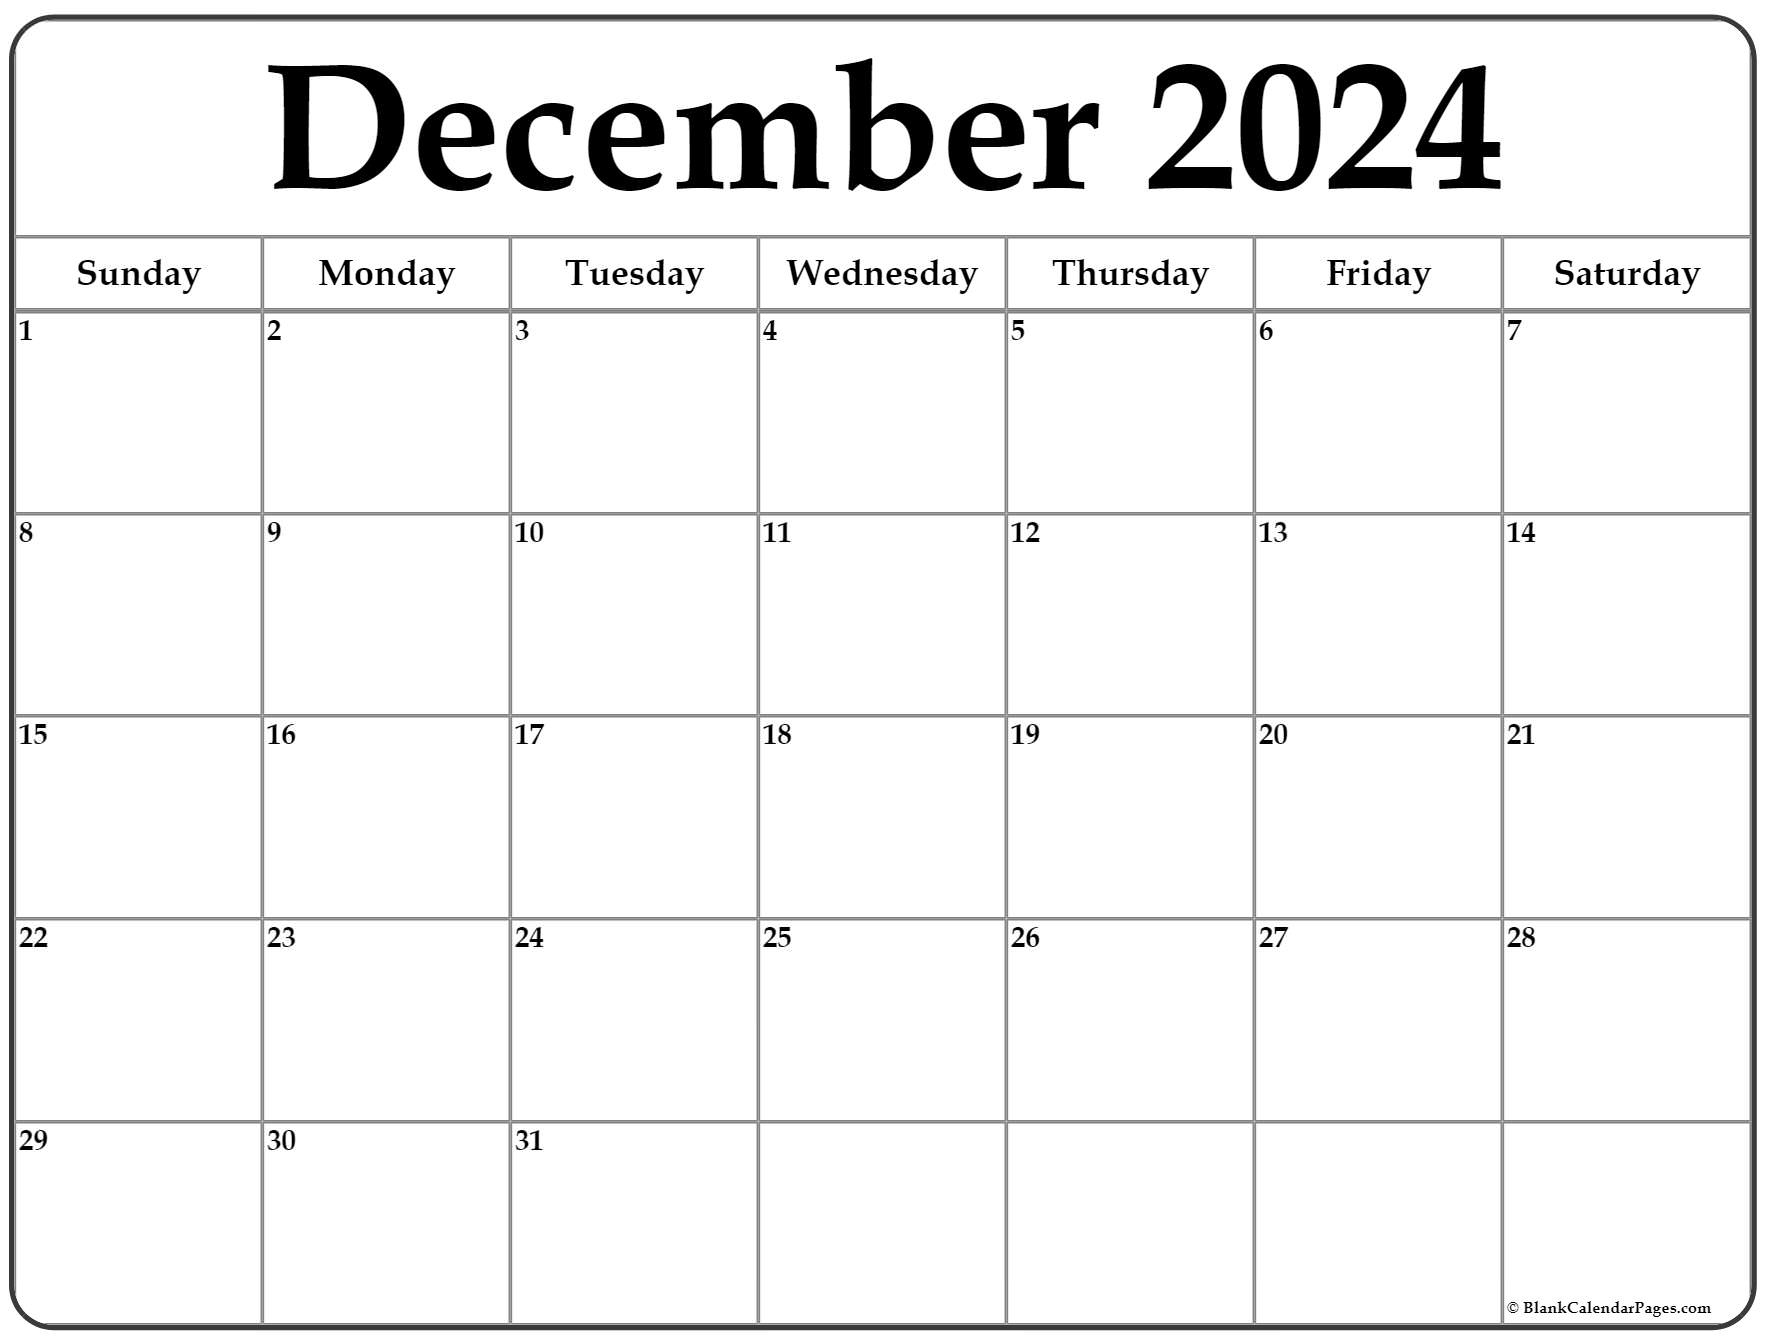 Dec 2024 Calendar Template Free Chere Deeanne - Free Printable 2024 December Calendar